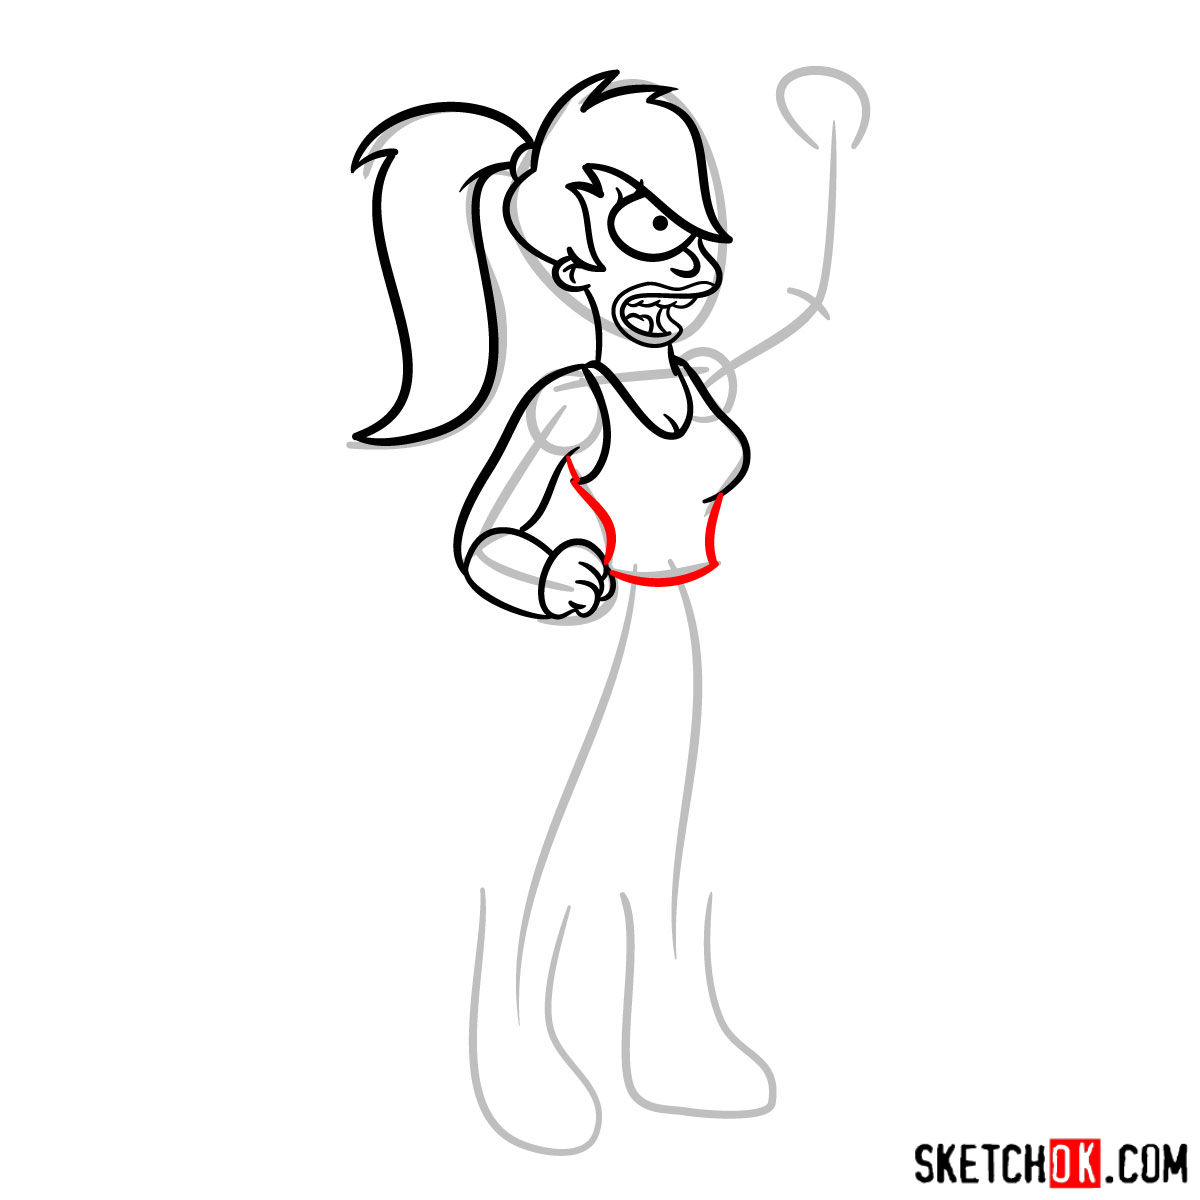 How to draw Leela from Futurama - step 08